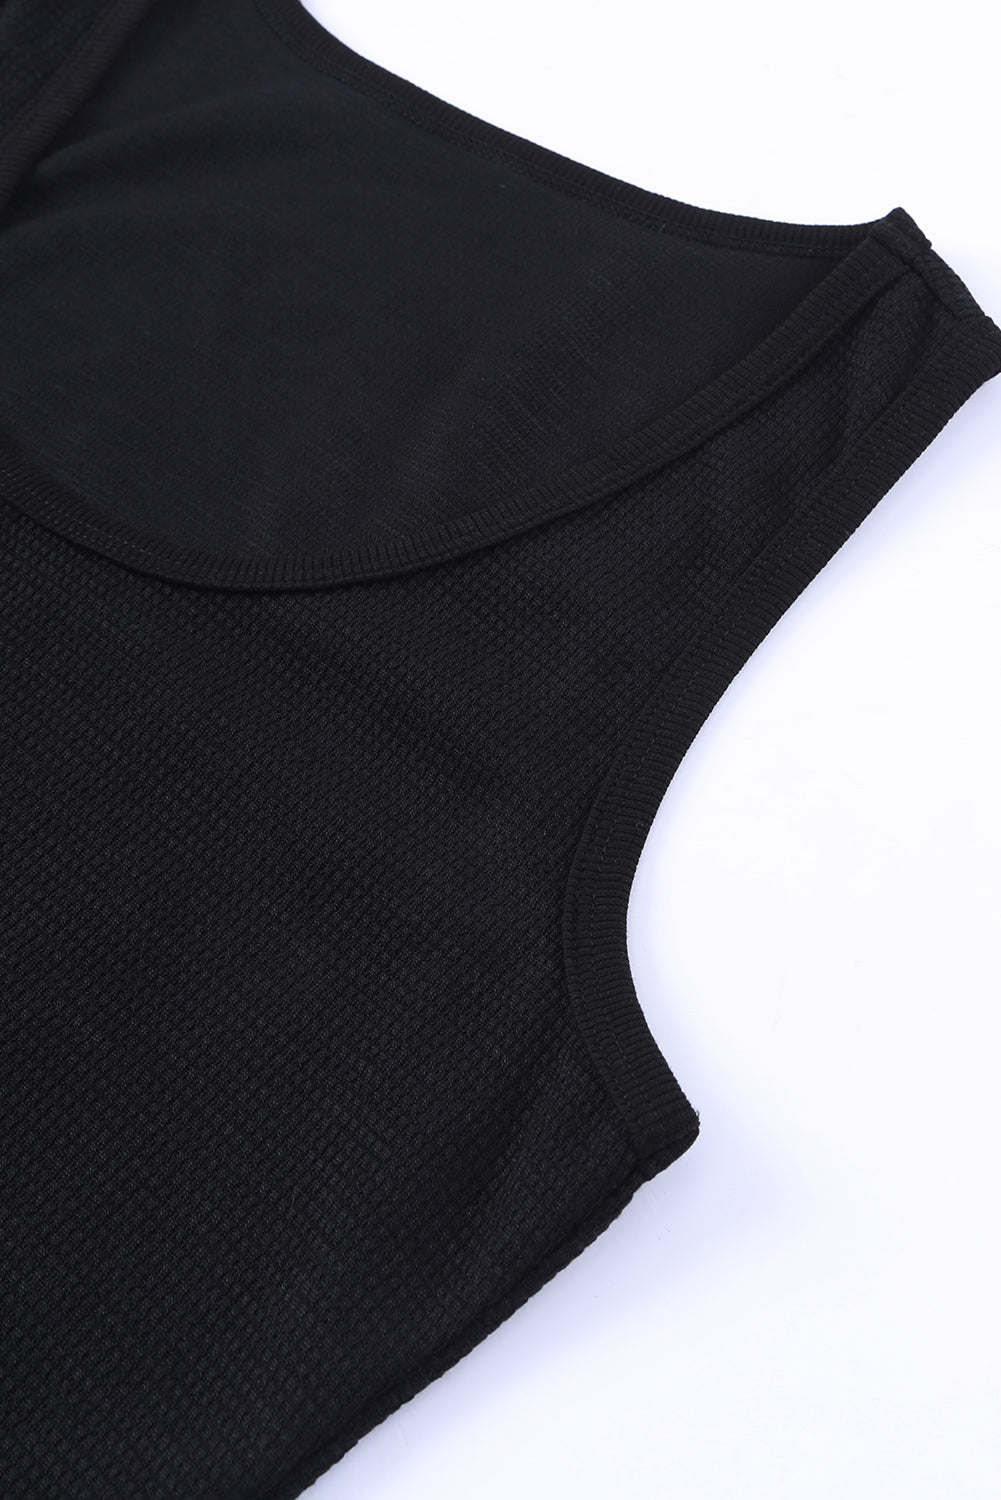 Black Plain Waffle Knit U Neck Tank Top Tank Tops JT's Designer Fashion